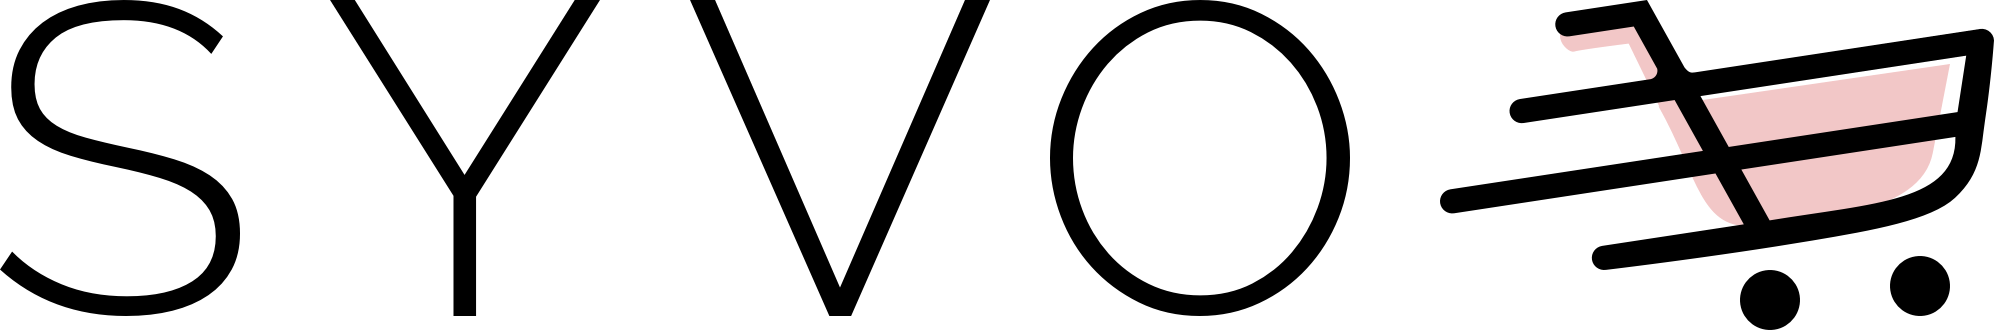 syvo logo (1).png